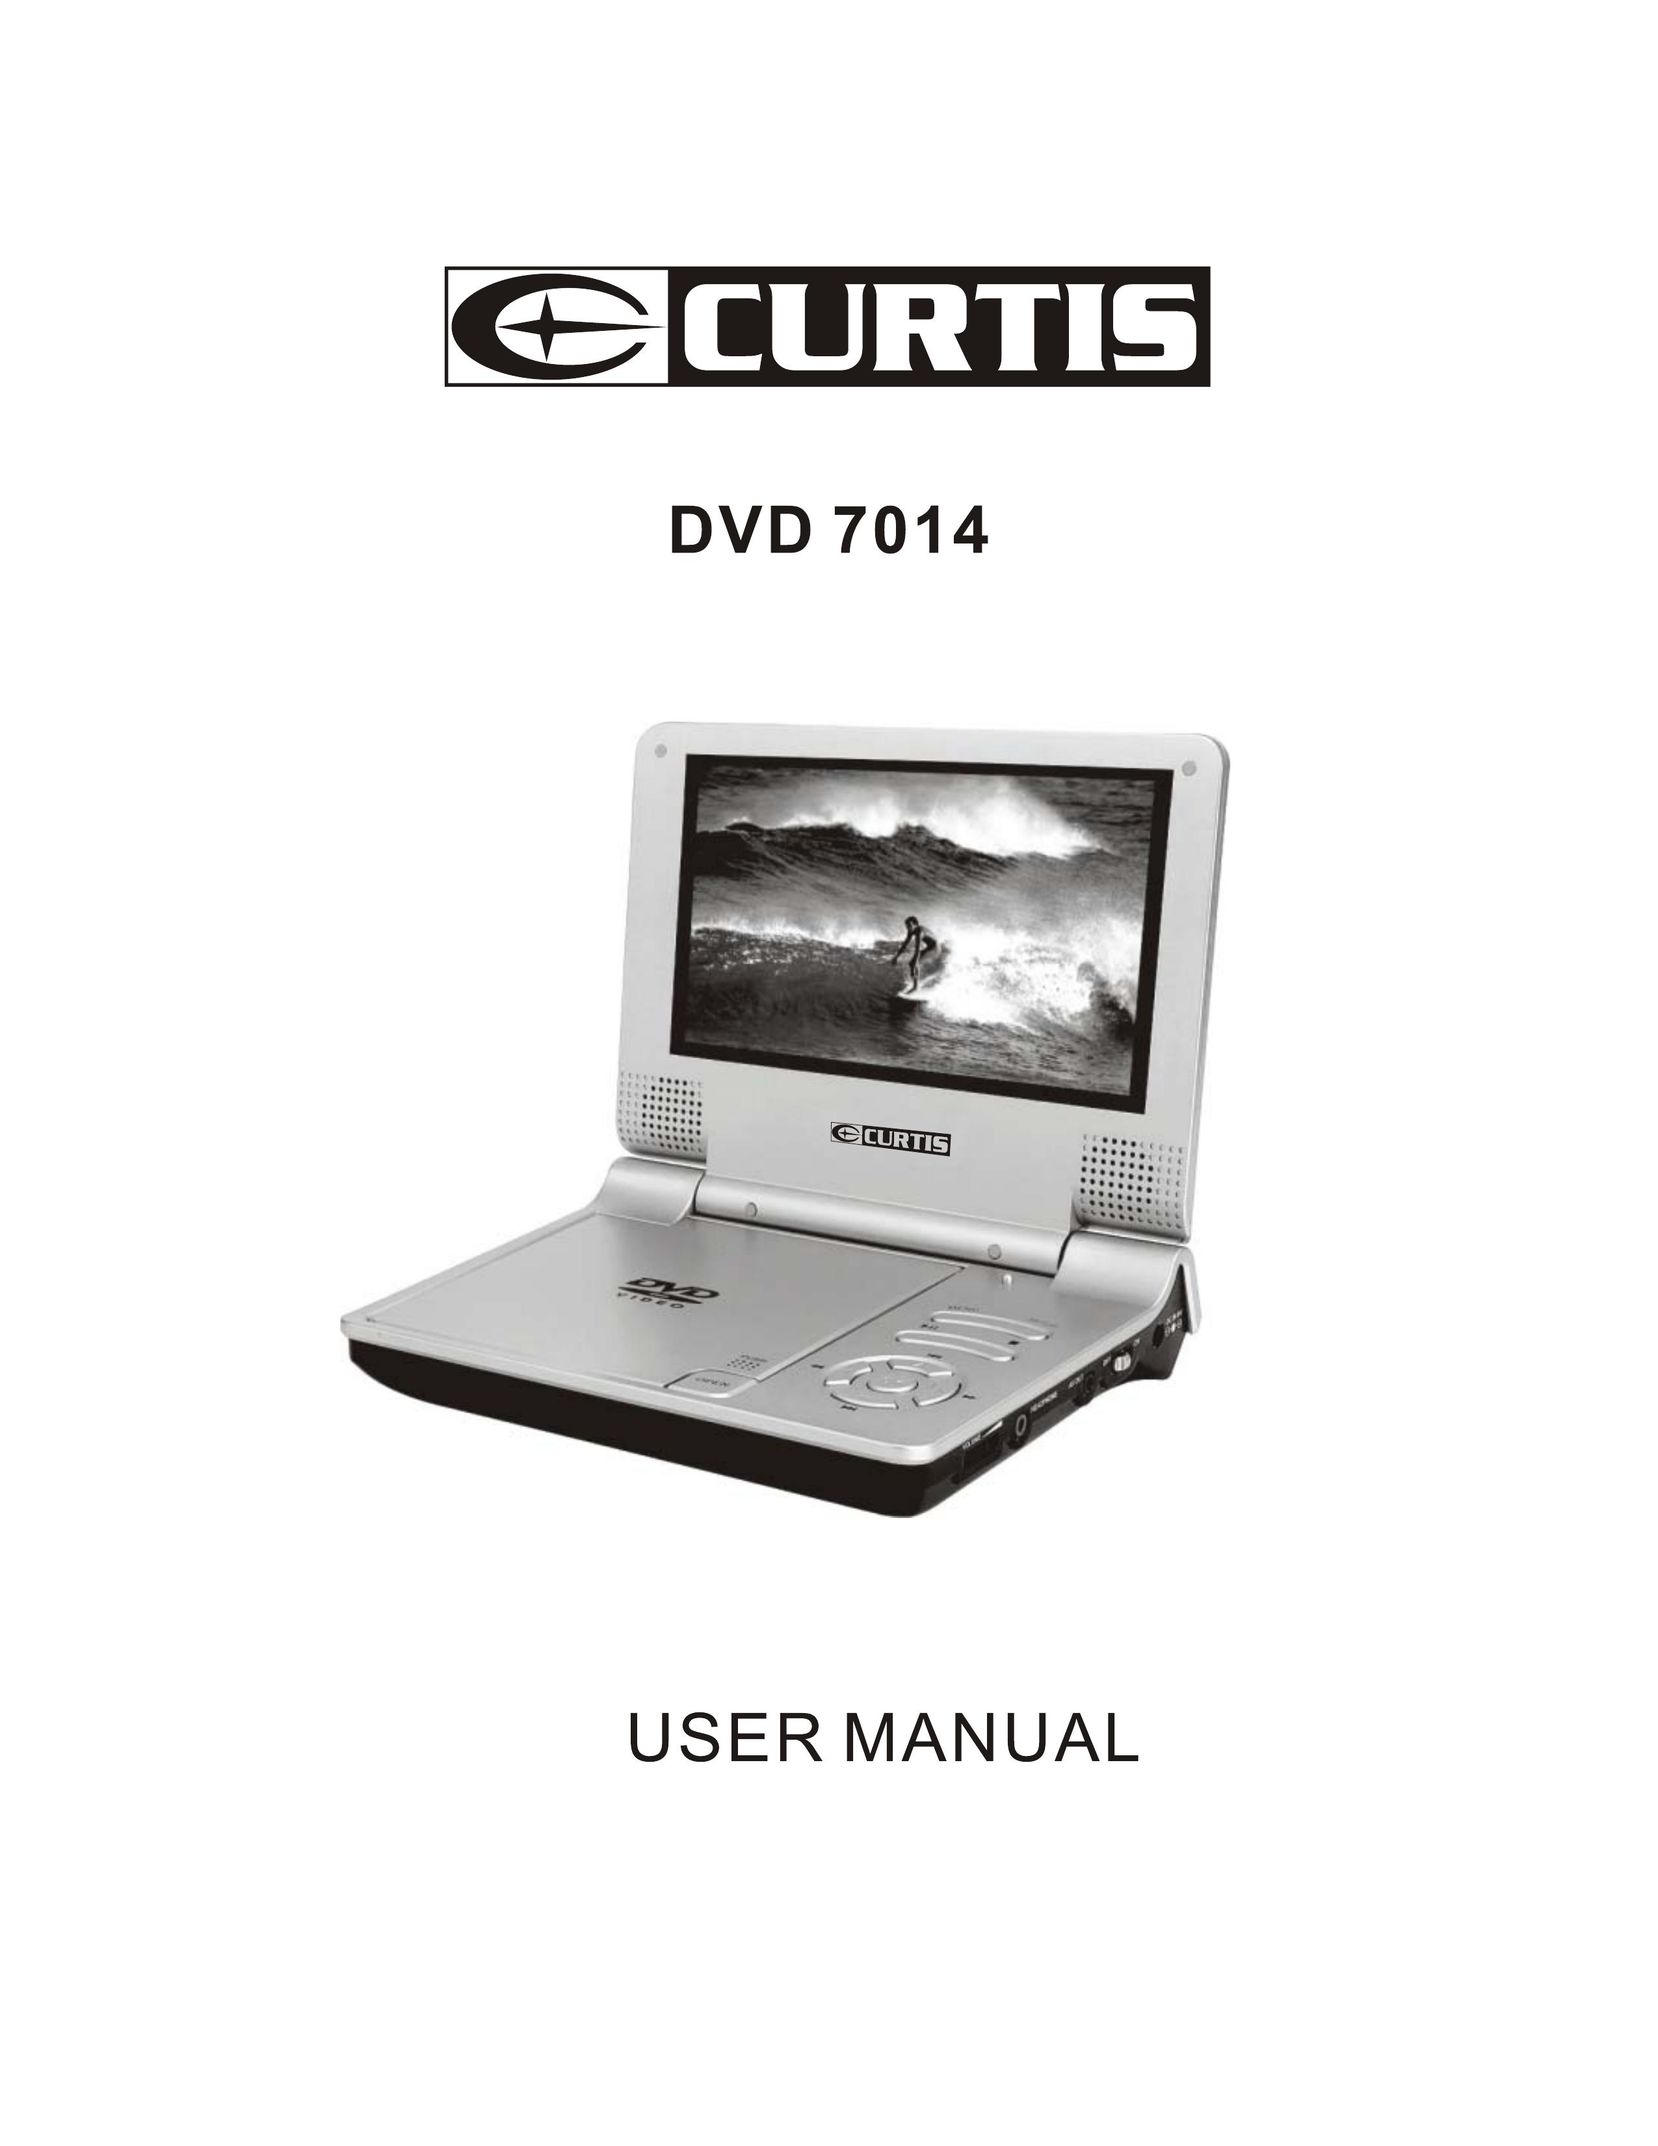 Curtis DVD 7014 Portable DVD Player User Manual